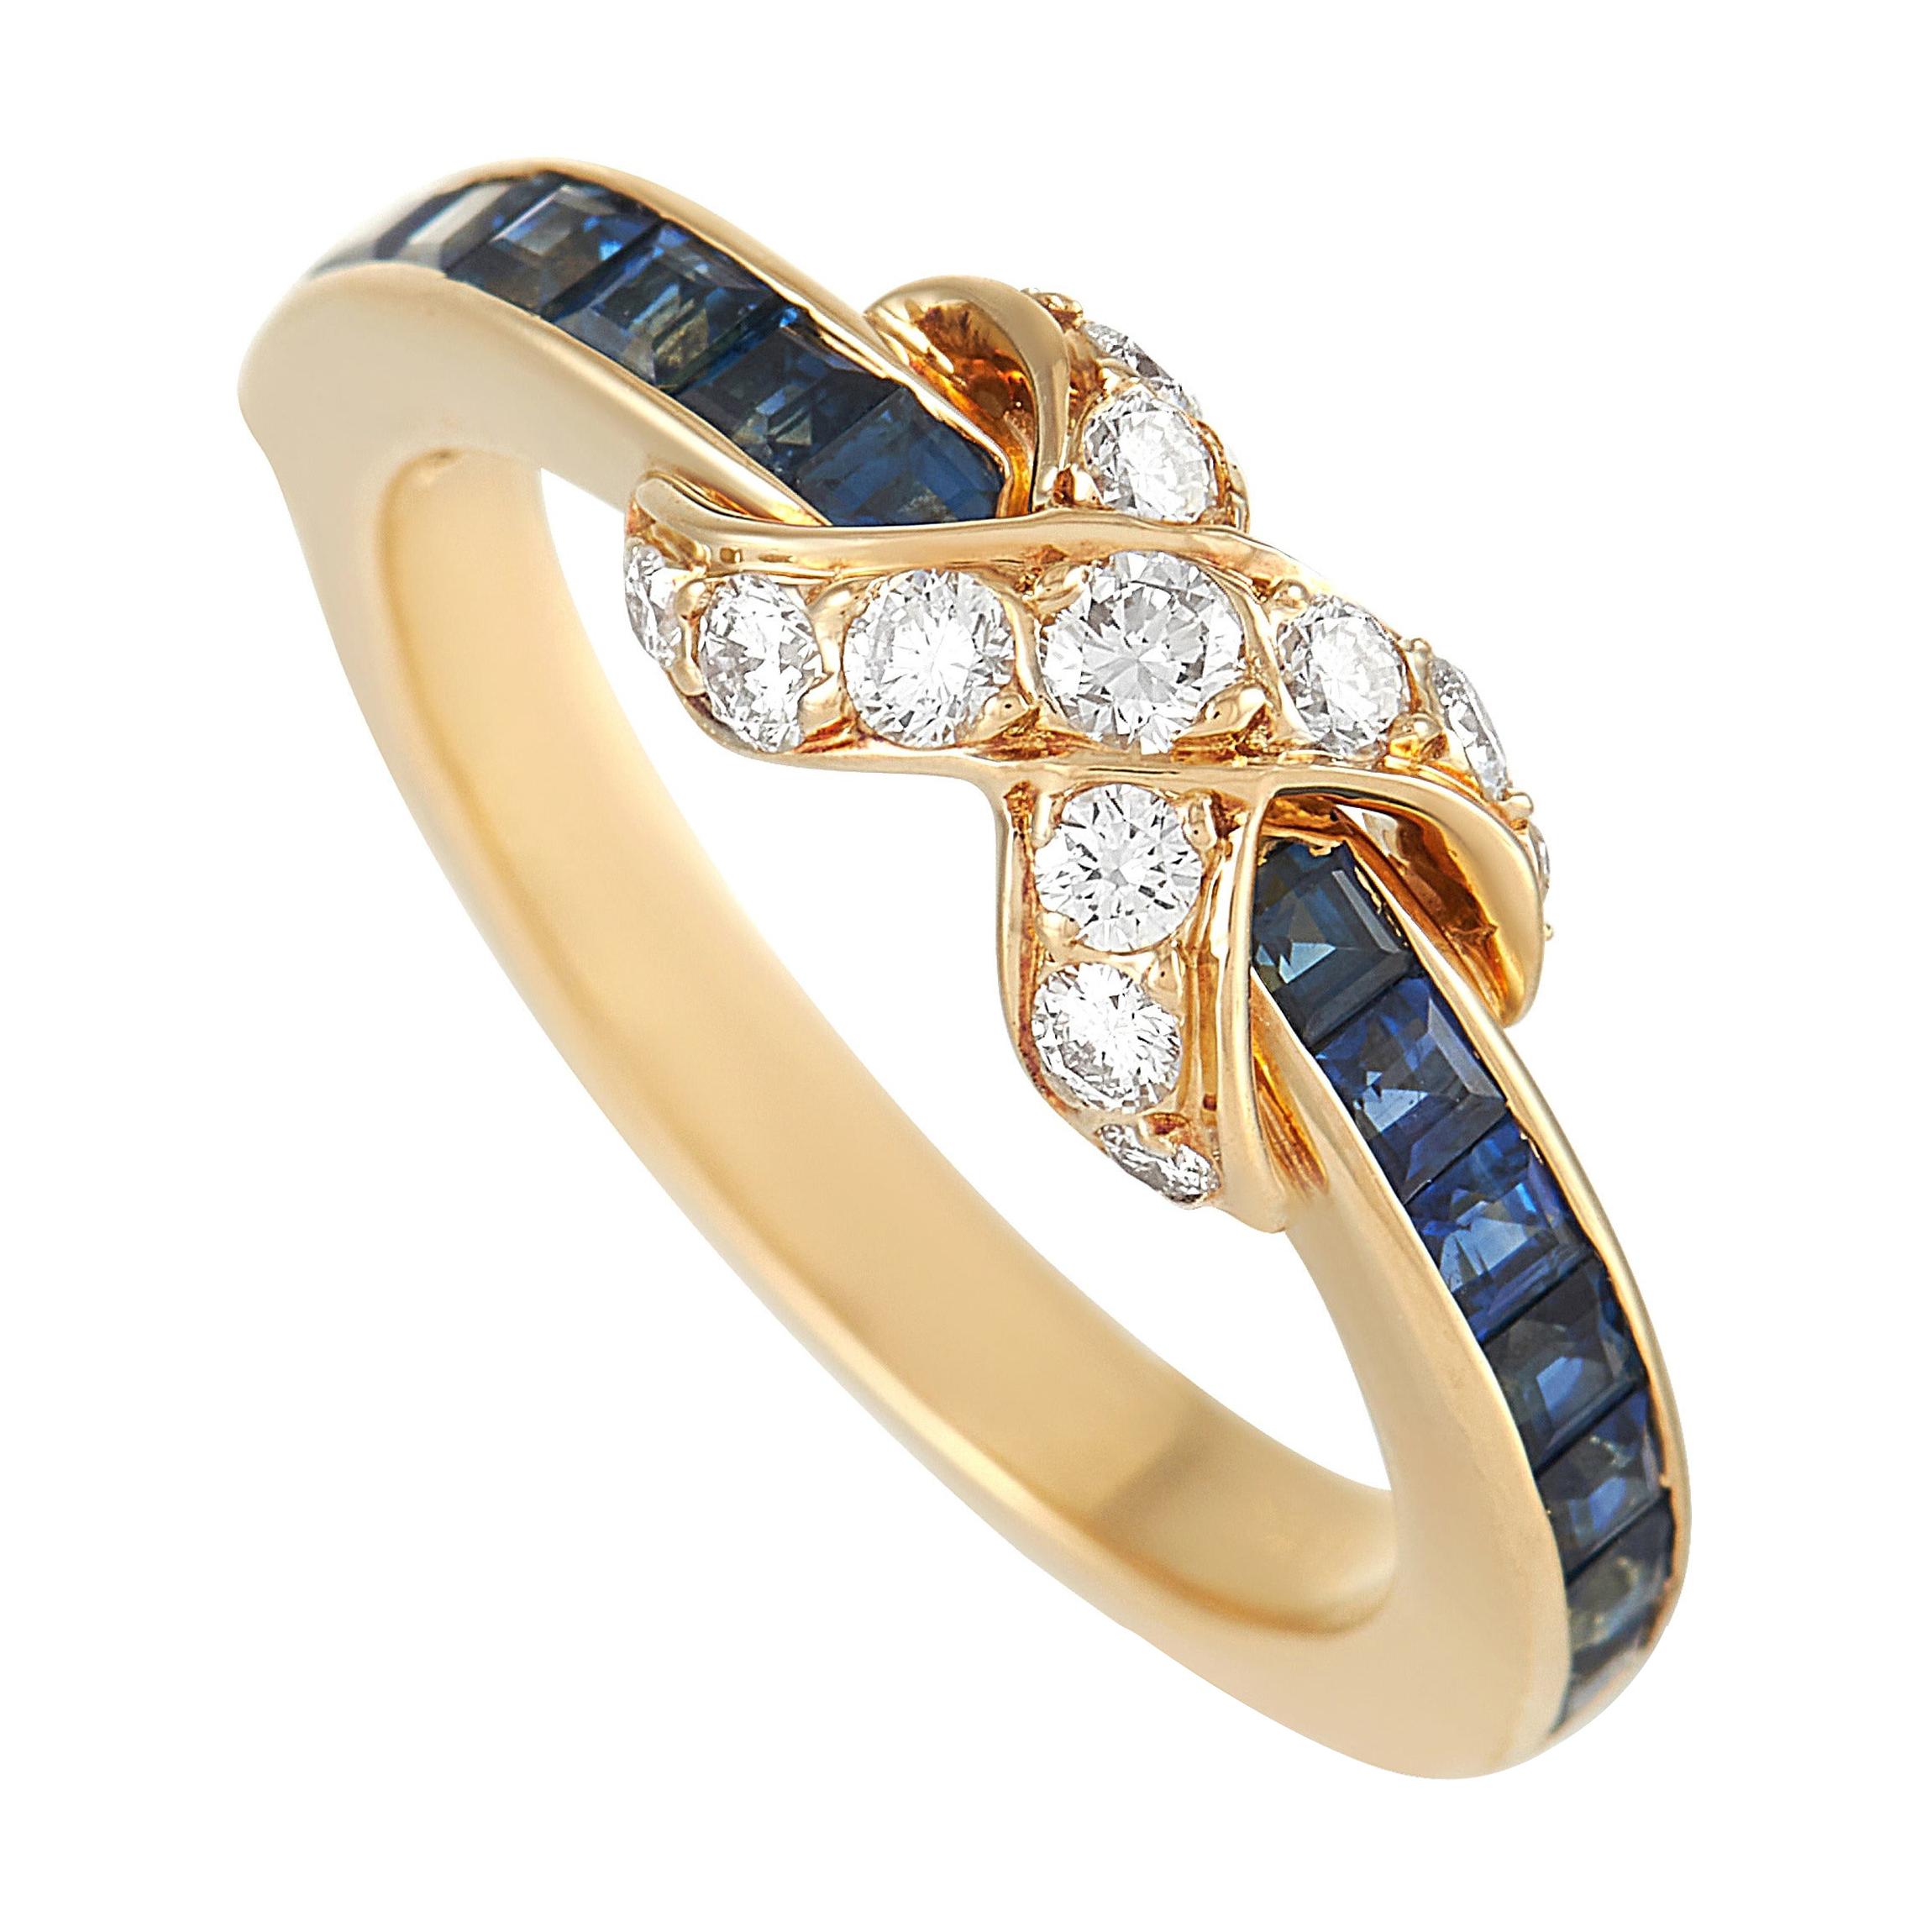 Tiffany & Co. 18K Yellow Gold Diamond and Sapphire Infinity Ring